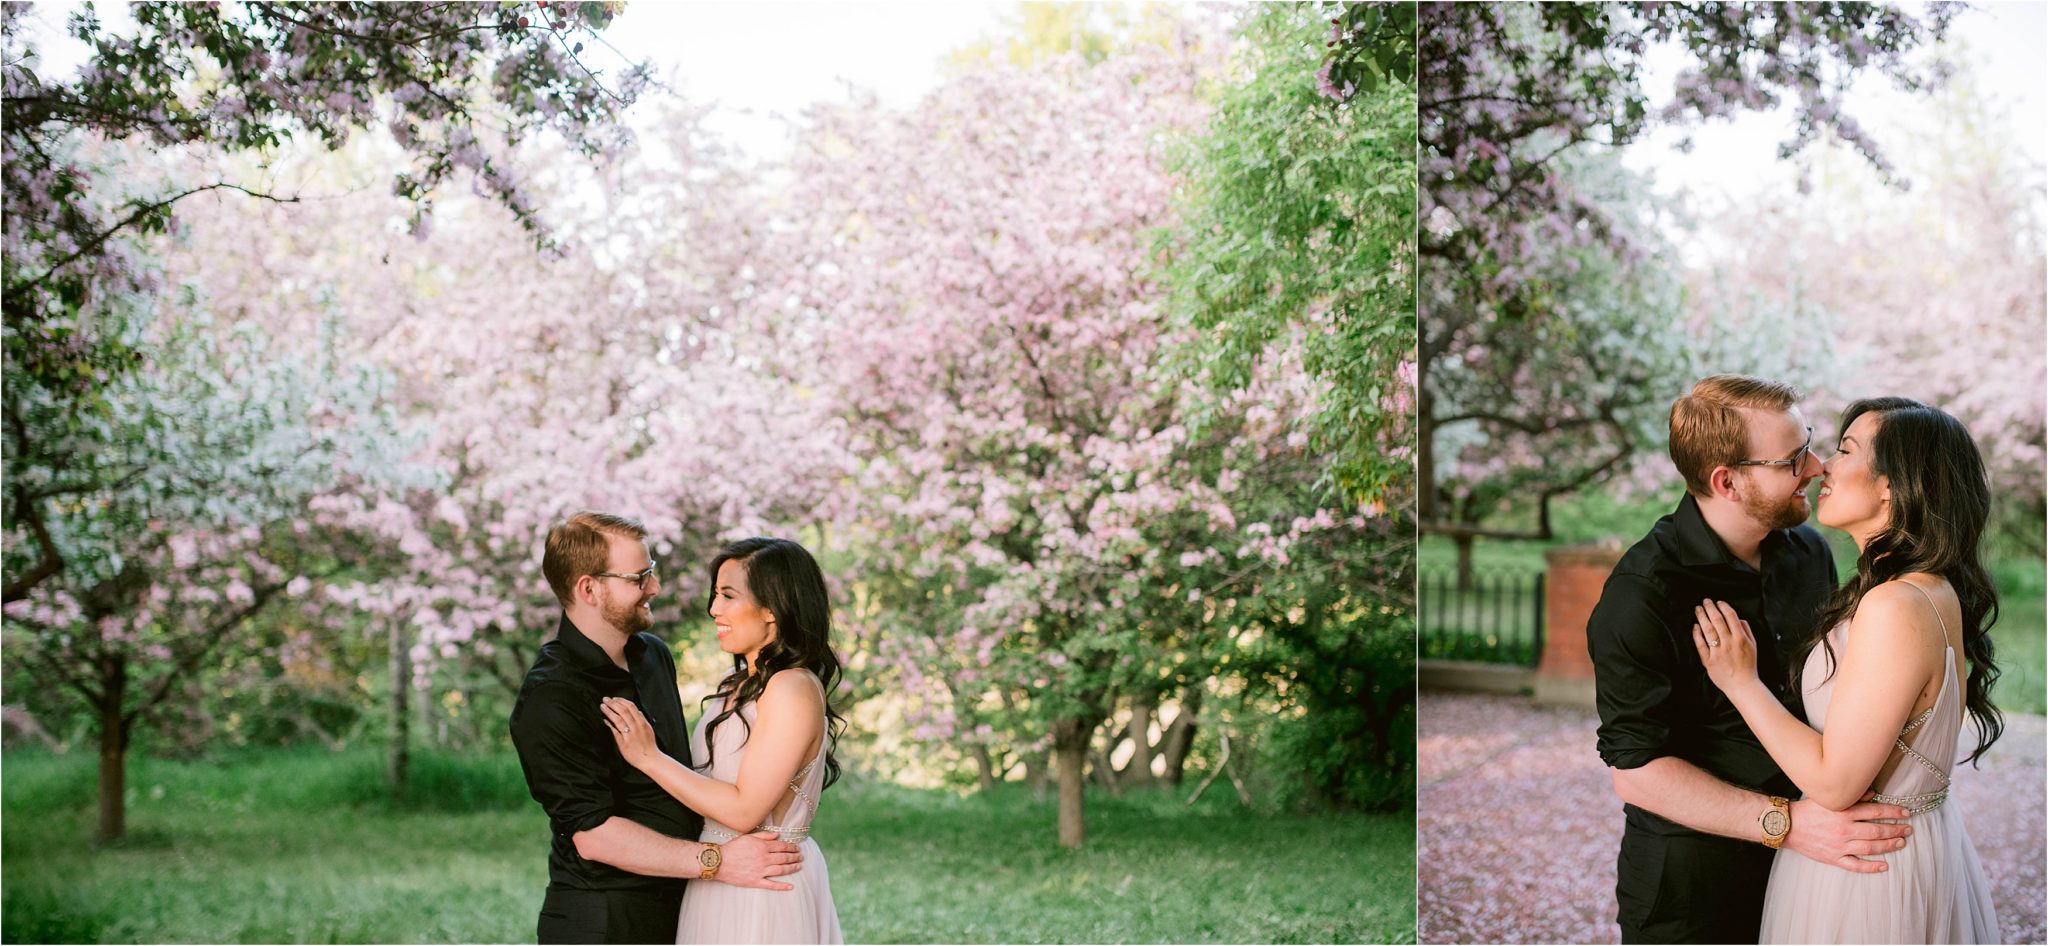 Romantic Cherry Blossoms Engagement Photos in Edmonton